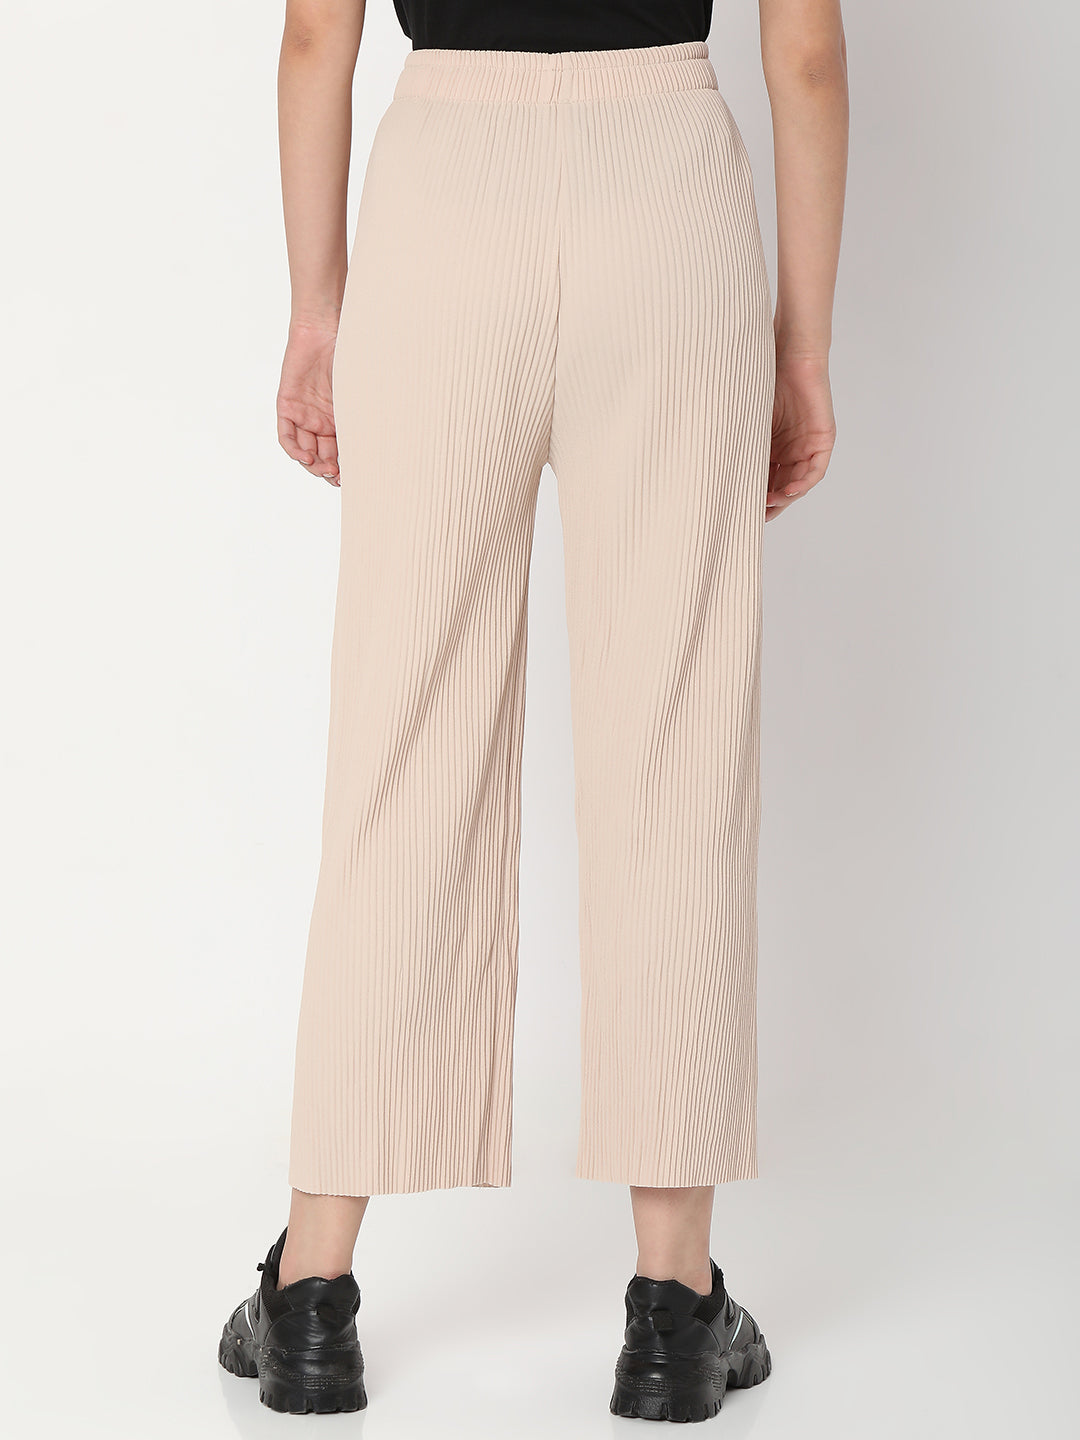 Spykar Cream Cotton Regular Fit Trackpants For Women